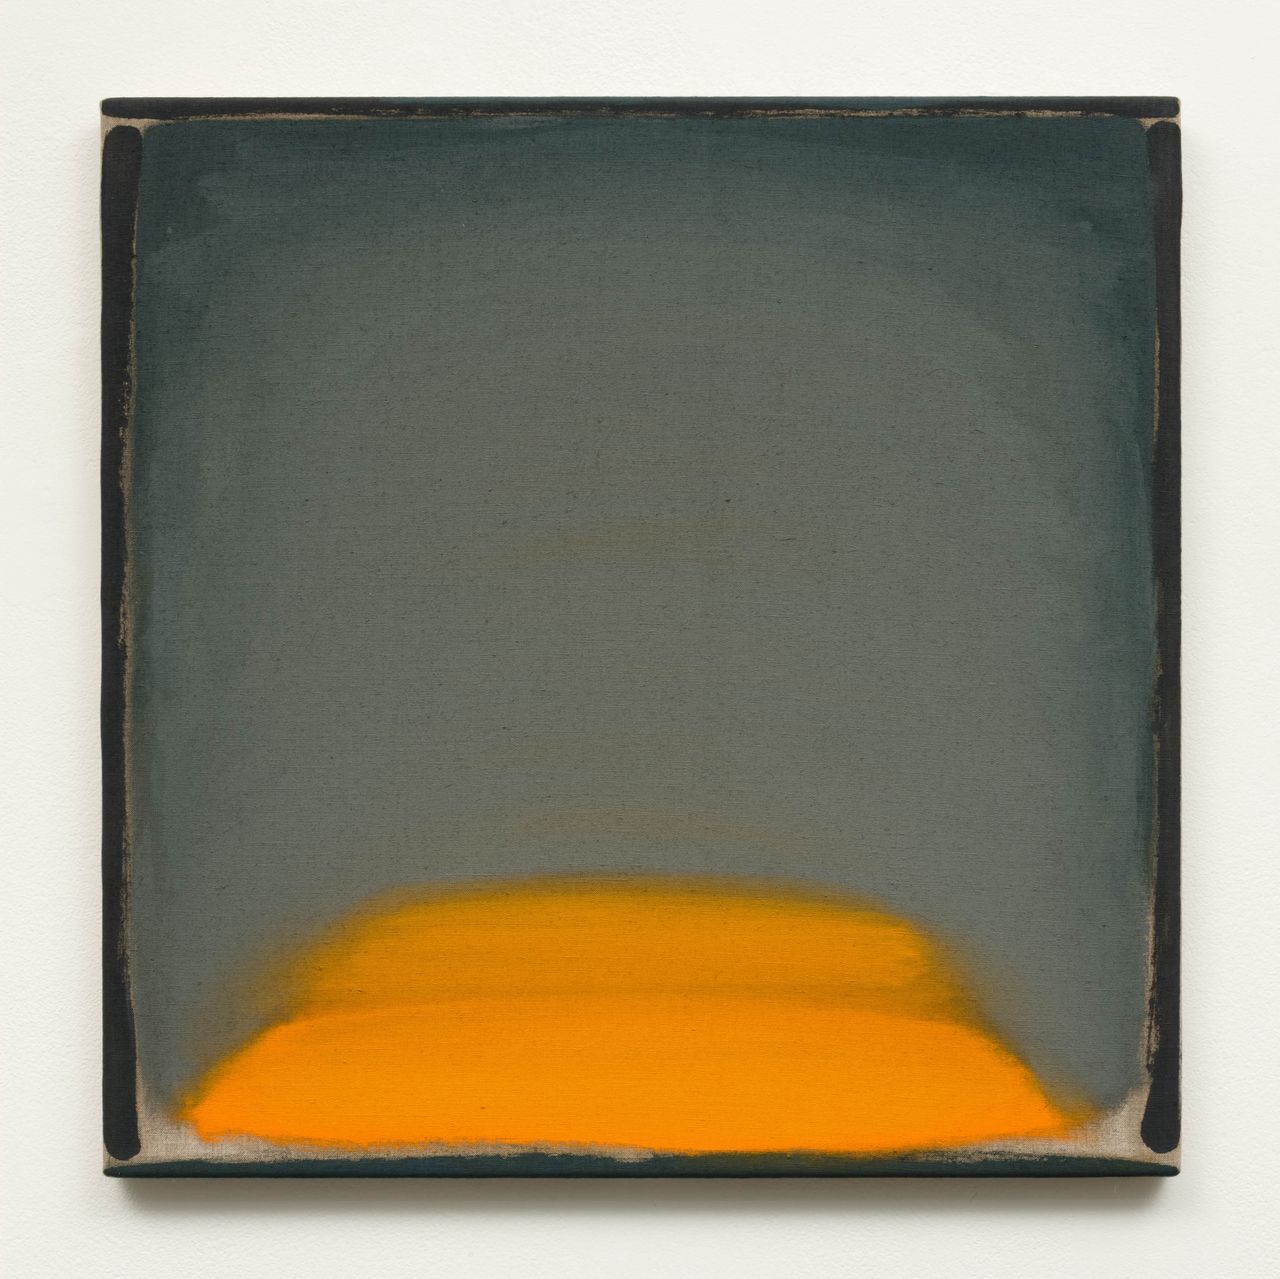 Untitled, 2010-2011 | Oil on linen 42.93 x 42.93 cm